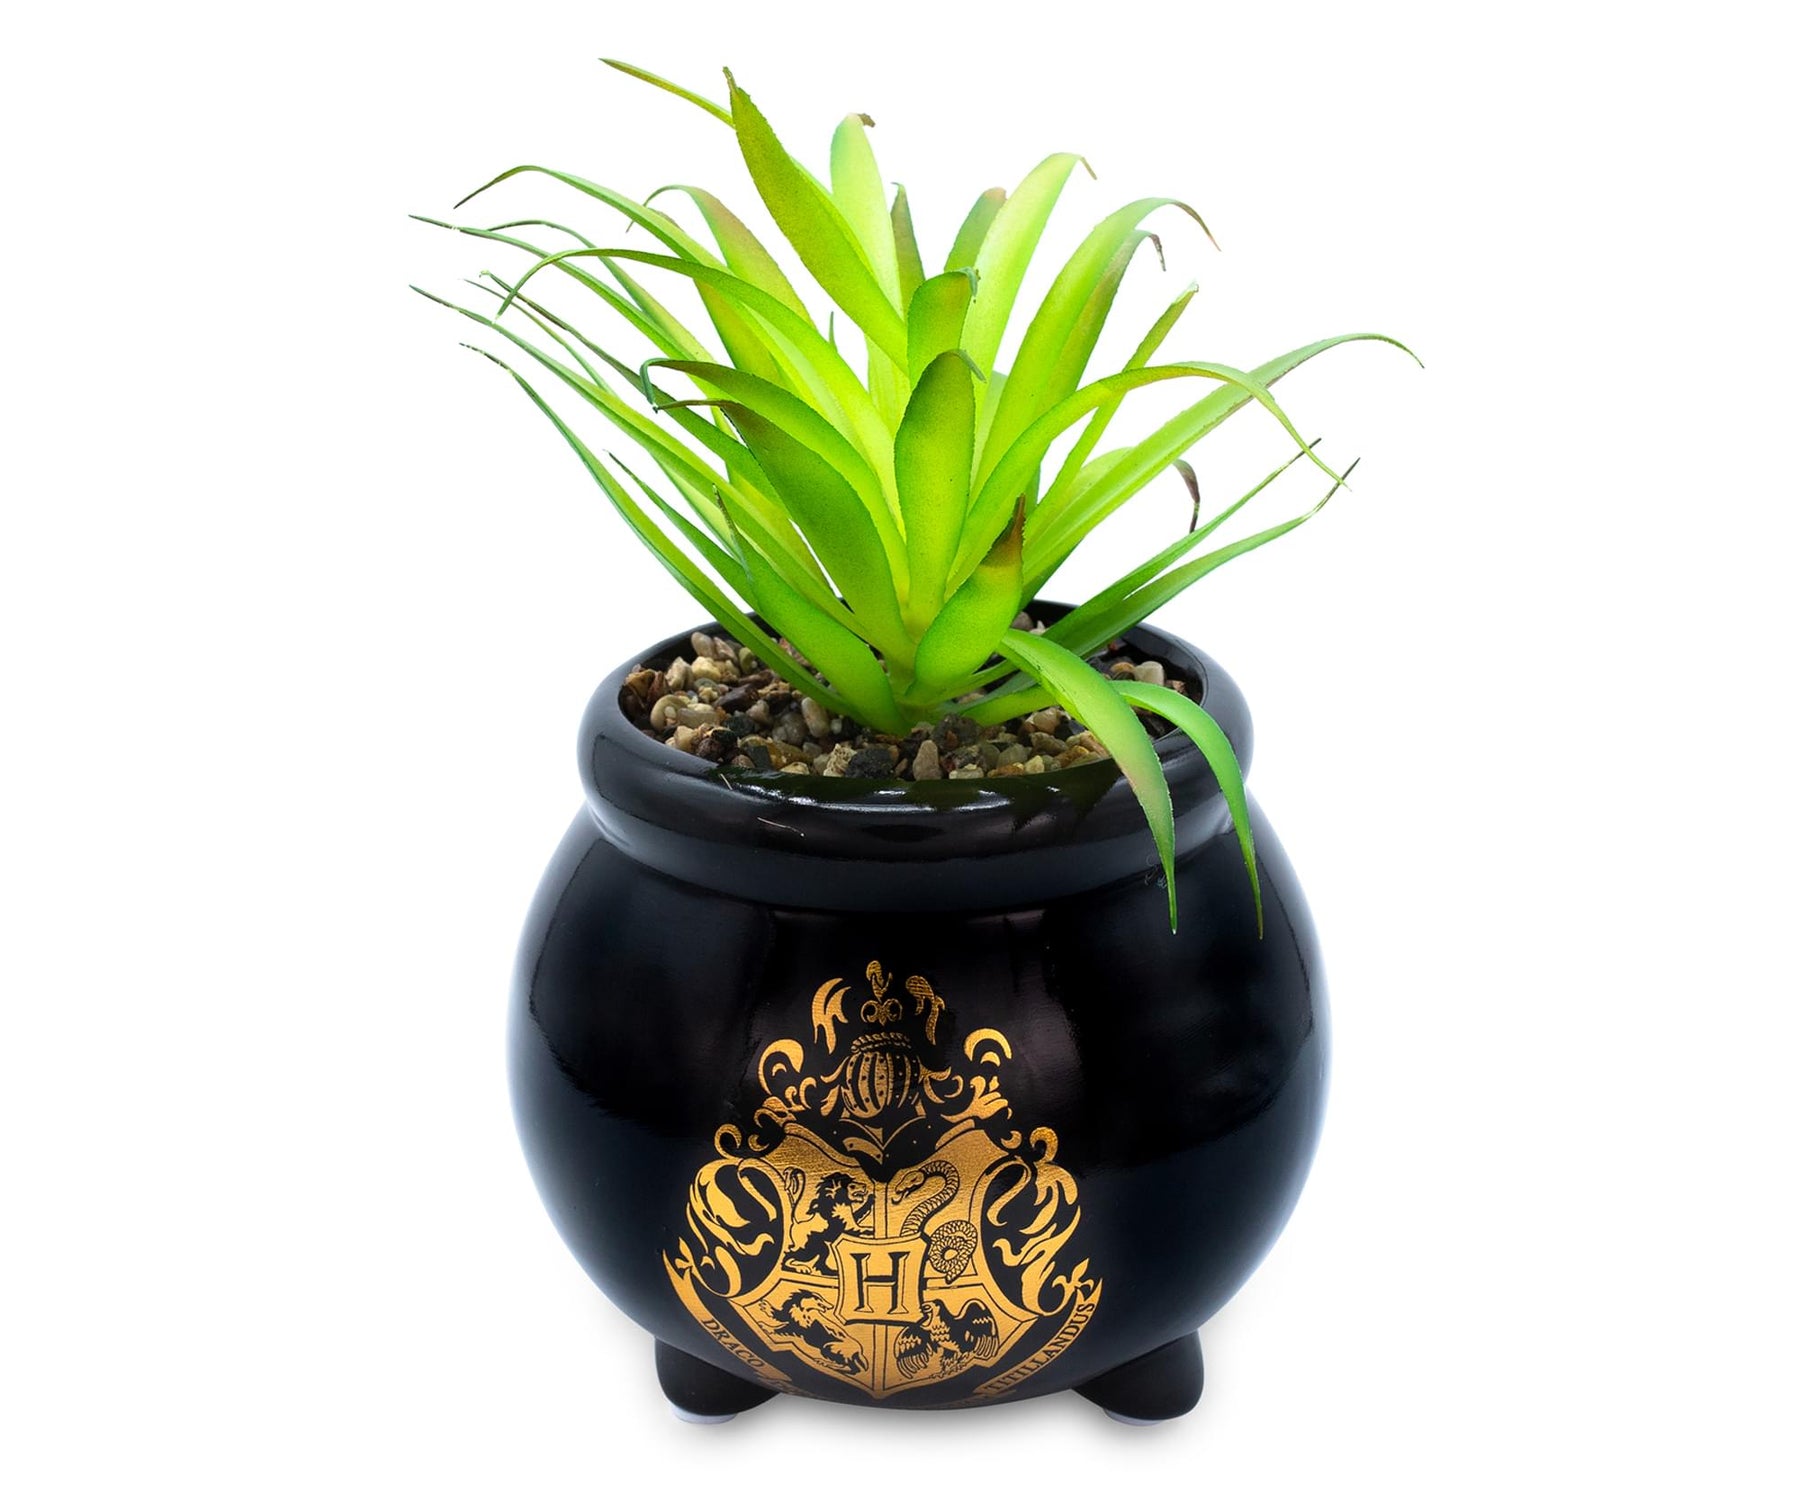 Harry Potter Hogwarts Cauldron 8.25 x 4.5 x 4.5 Inch Ceramic Planter w/ Artificial Plant